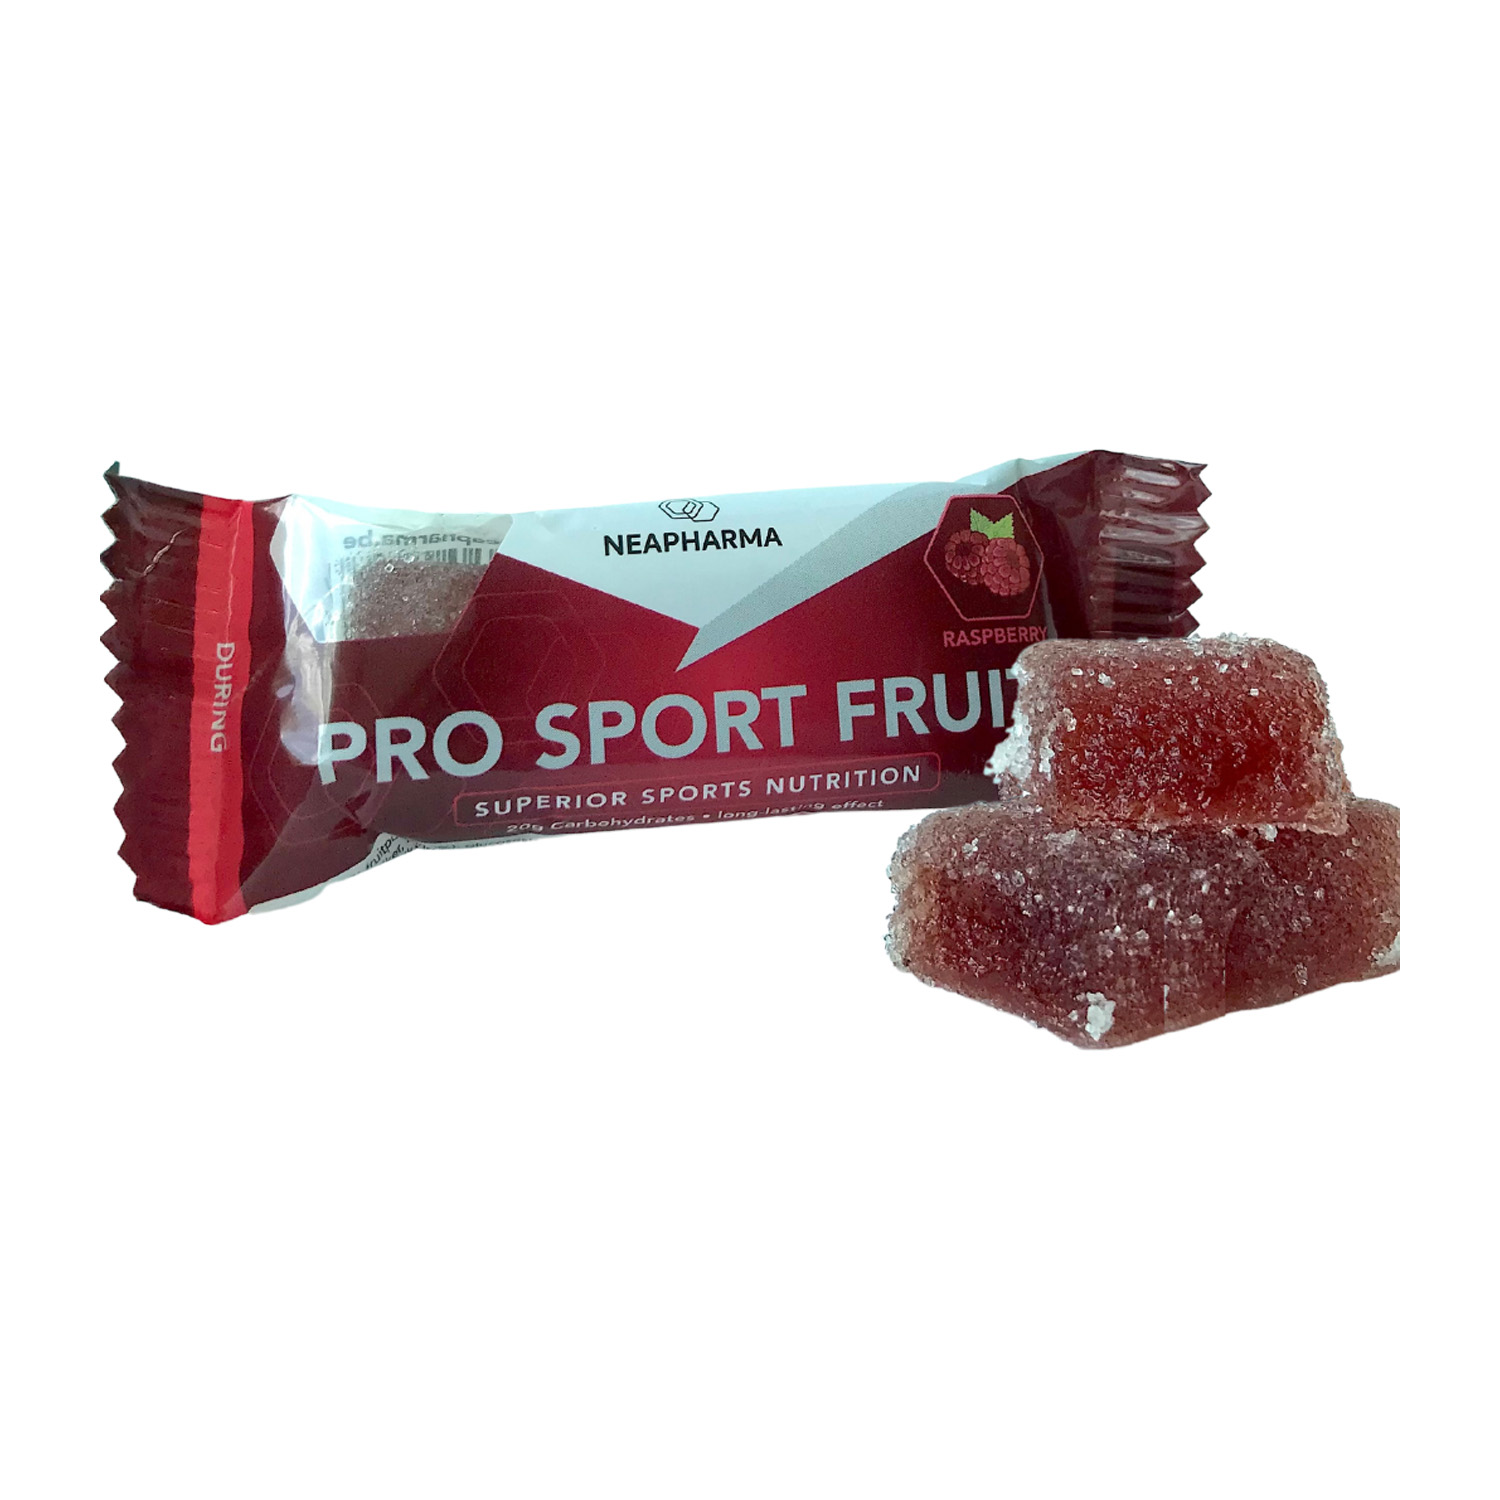 Neapharma Pro sport fruit